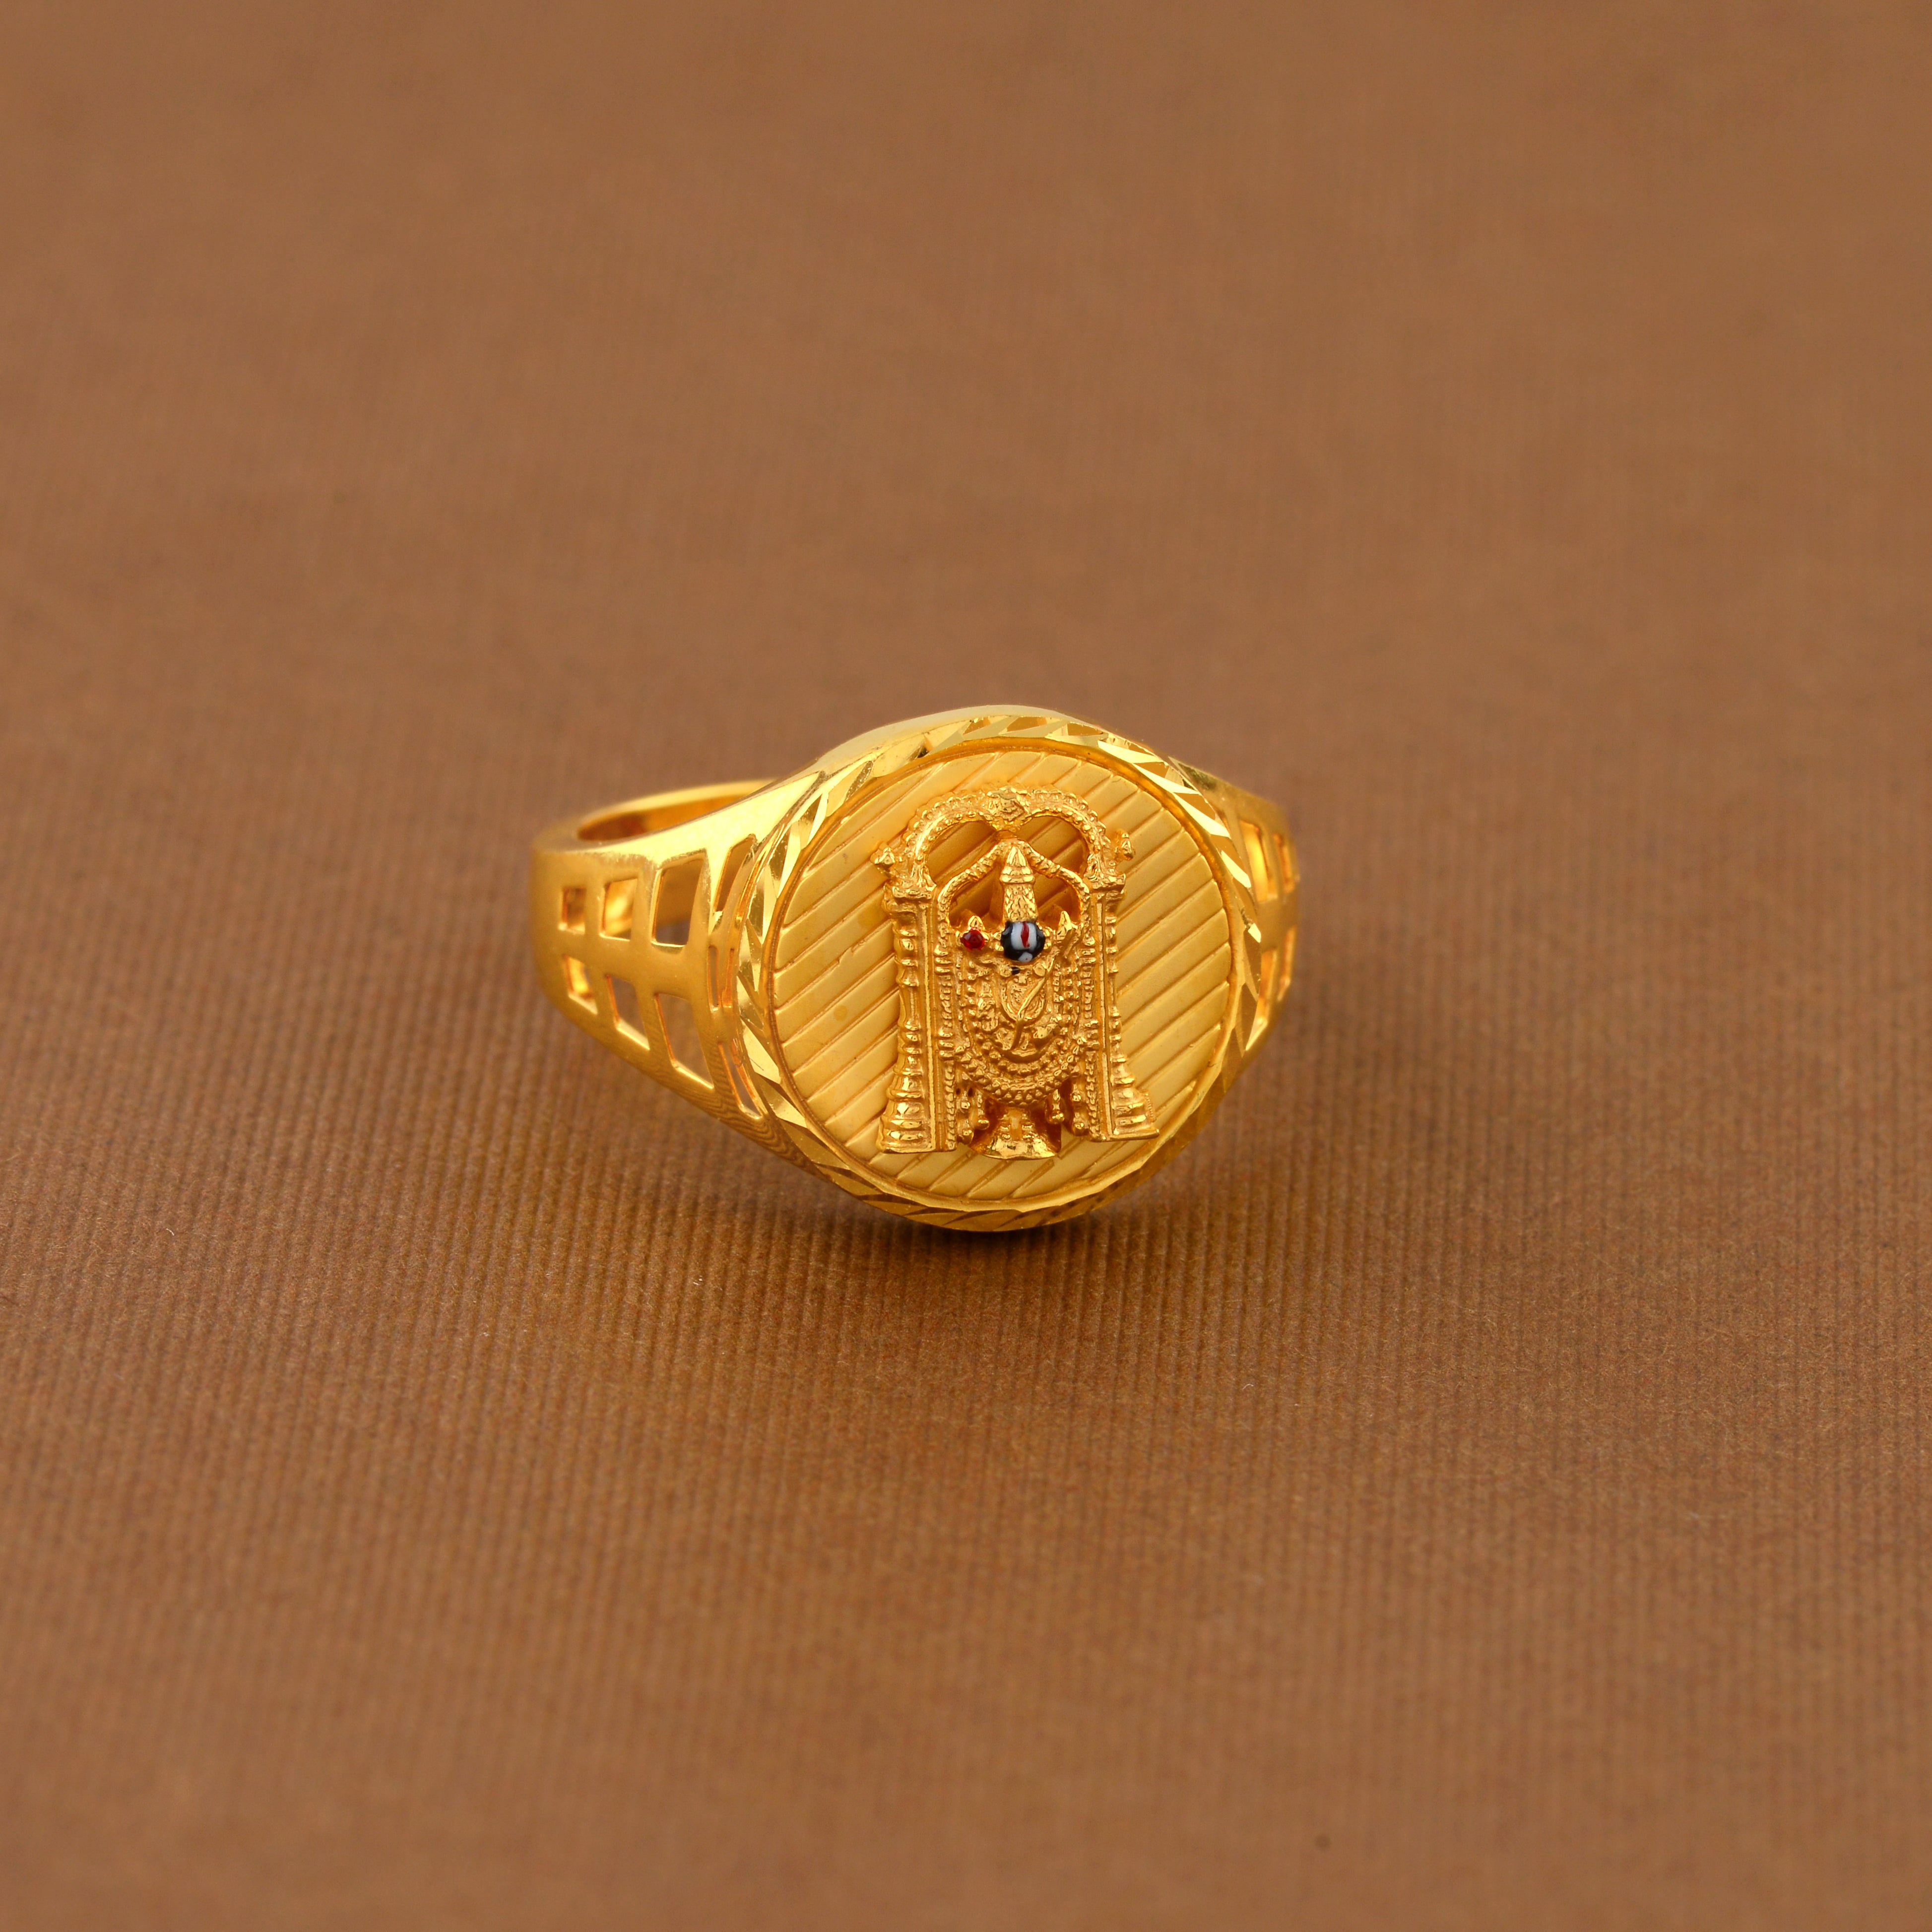 22k Solid Gold Ring , Vintage Look Gold Ring , Motif Gold Ring, Floral Designed  Gold Ring, Handmade Gold Ring, Exclusive Handmade Gold Ring - Etsy